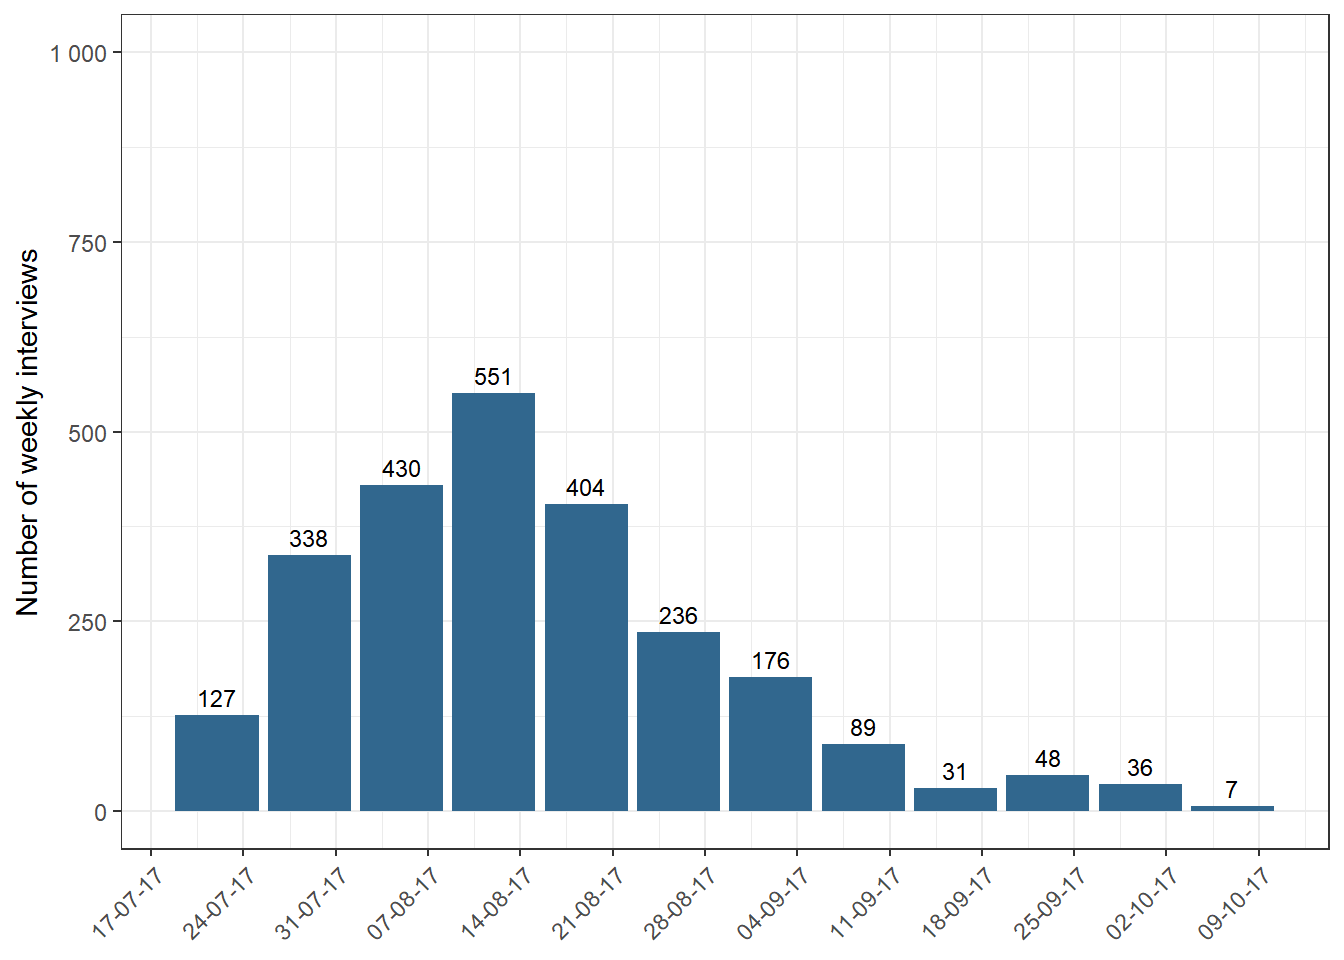 Number of weekly interviews, wave 2017